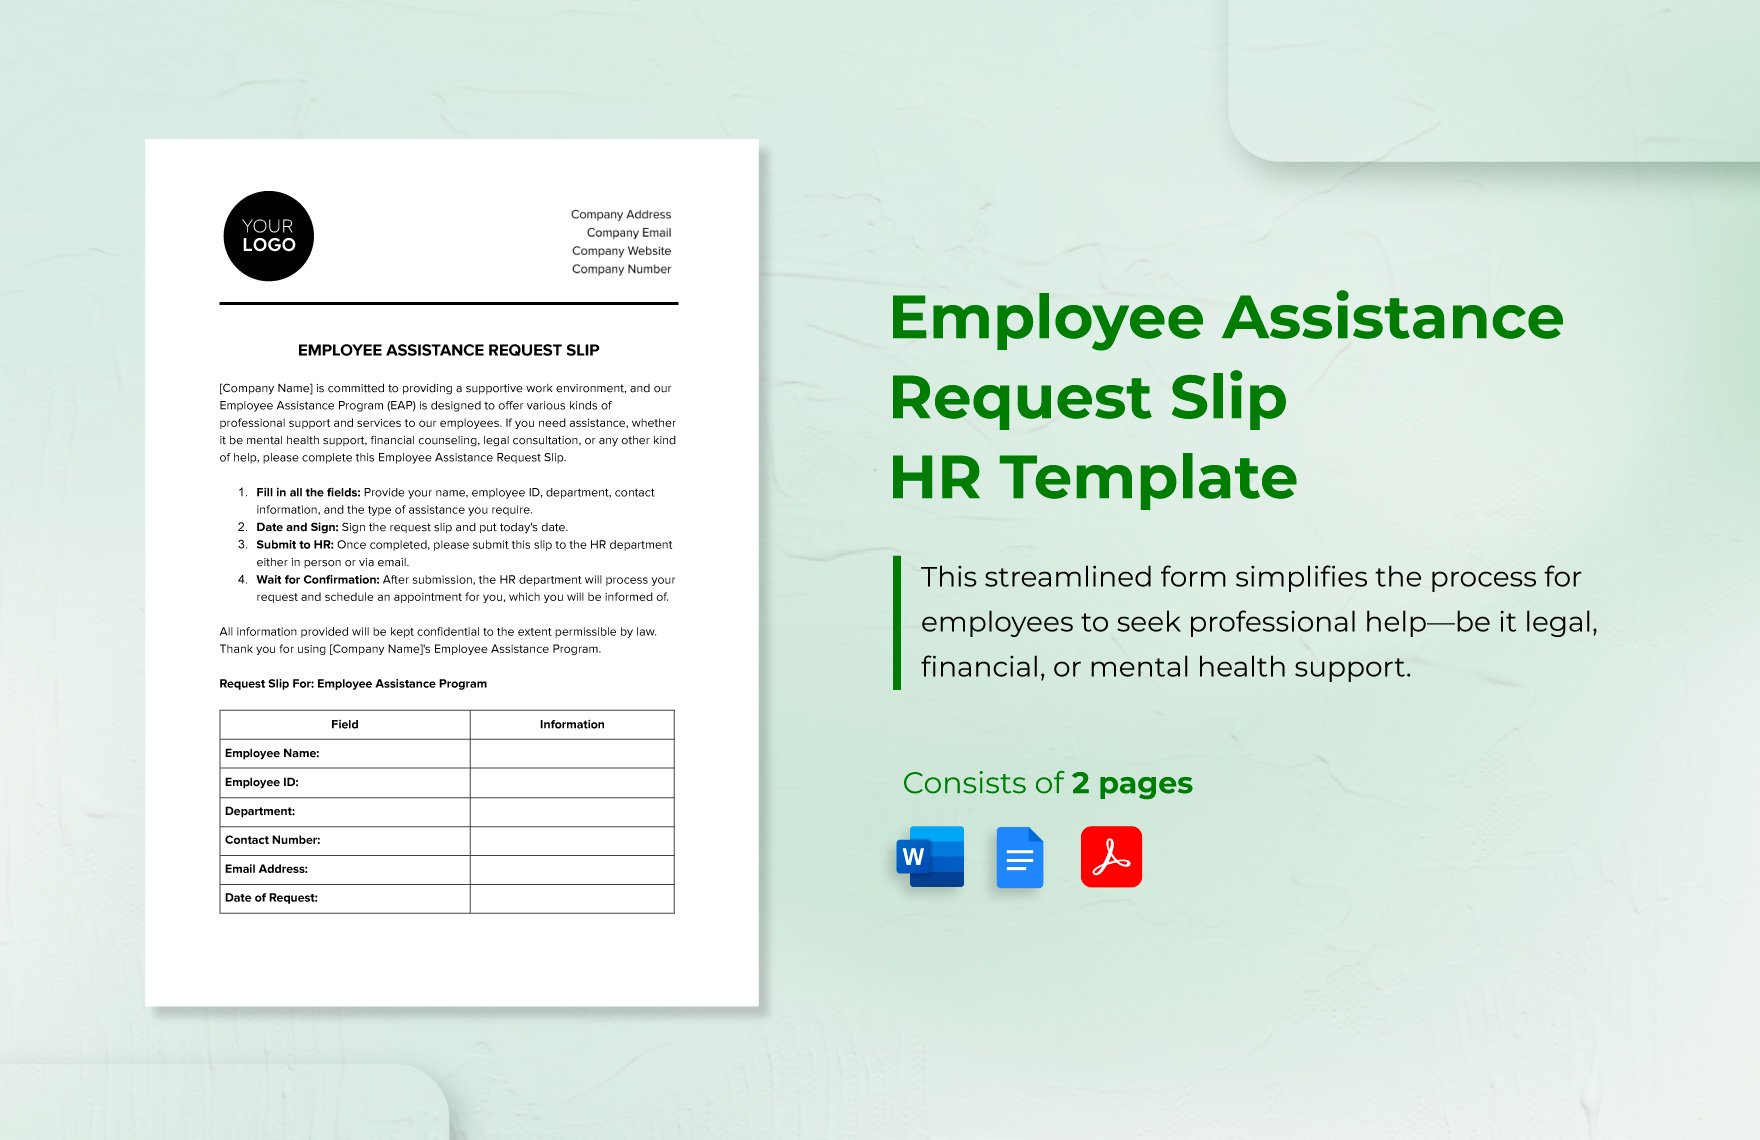 Employee Assistance Request Slip HR Template